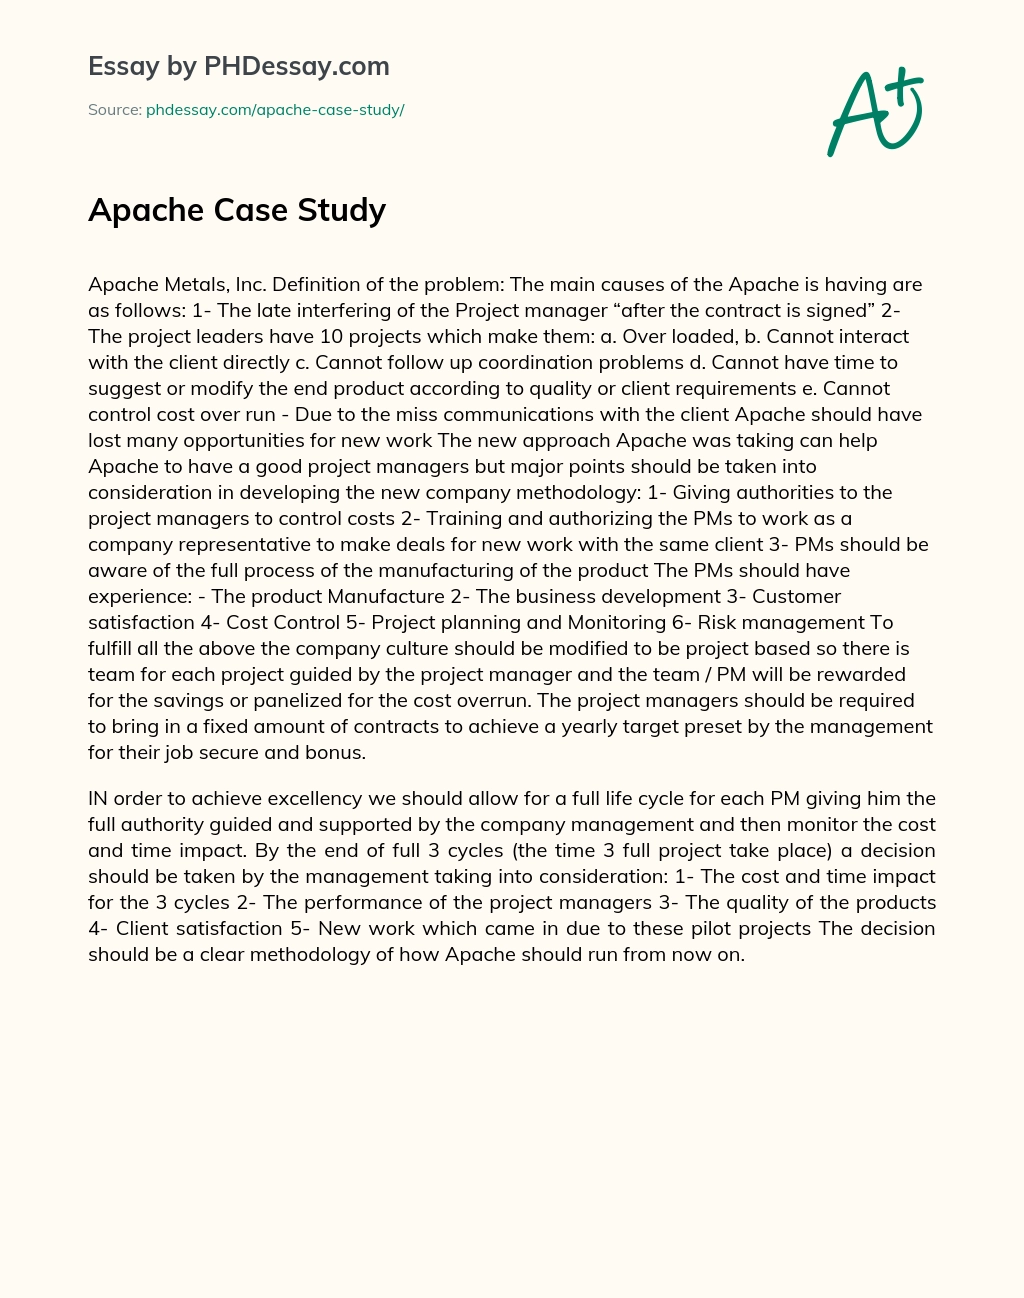 Apache Case Study essay